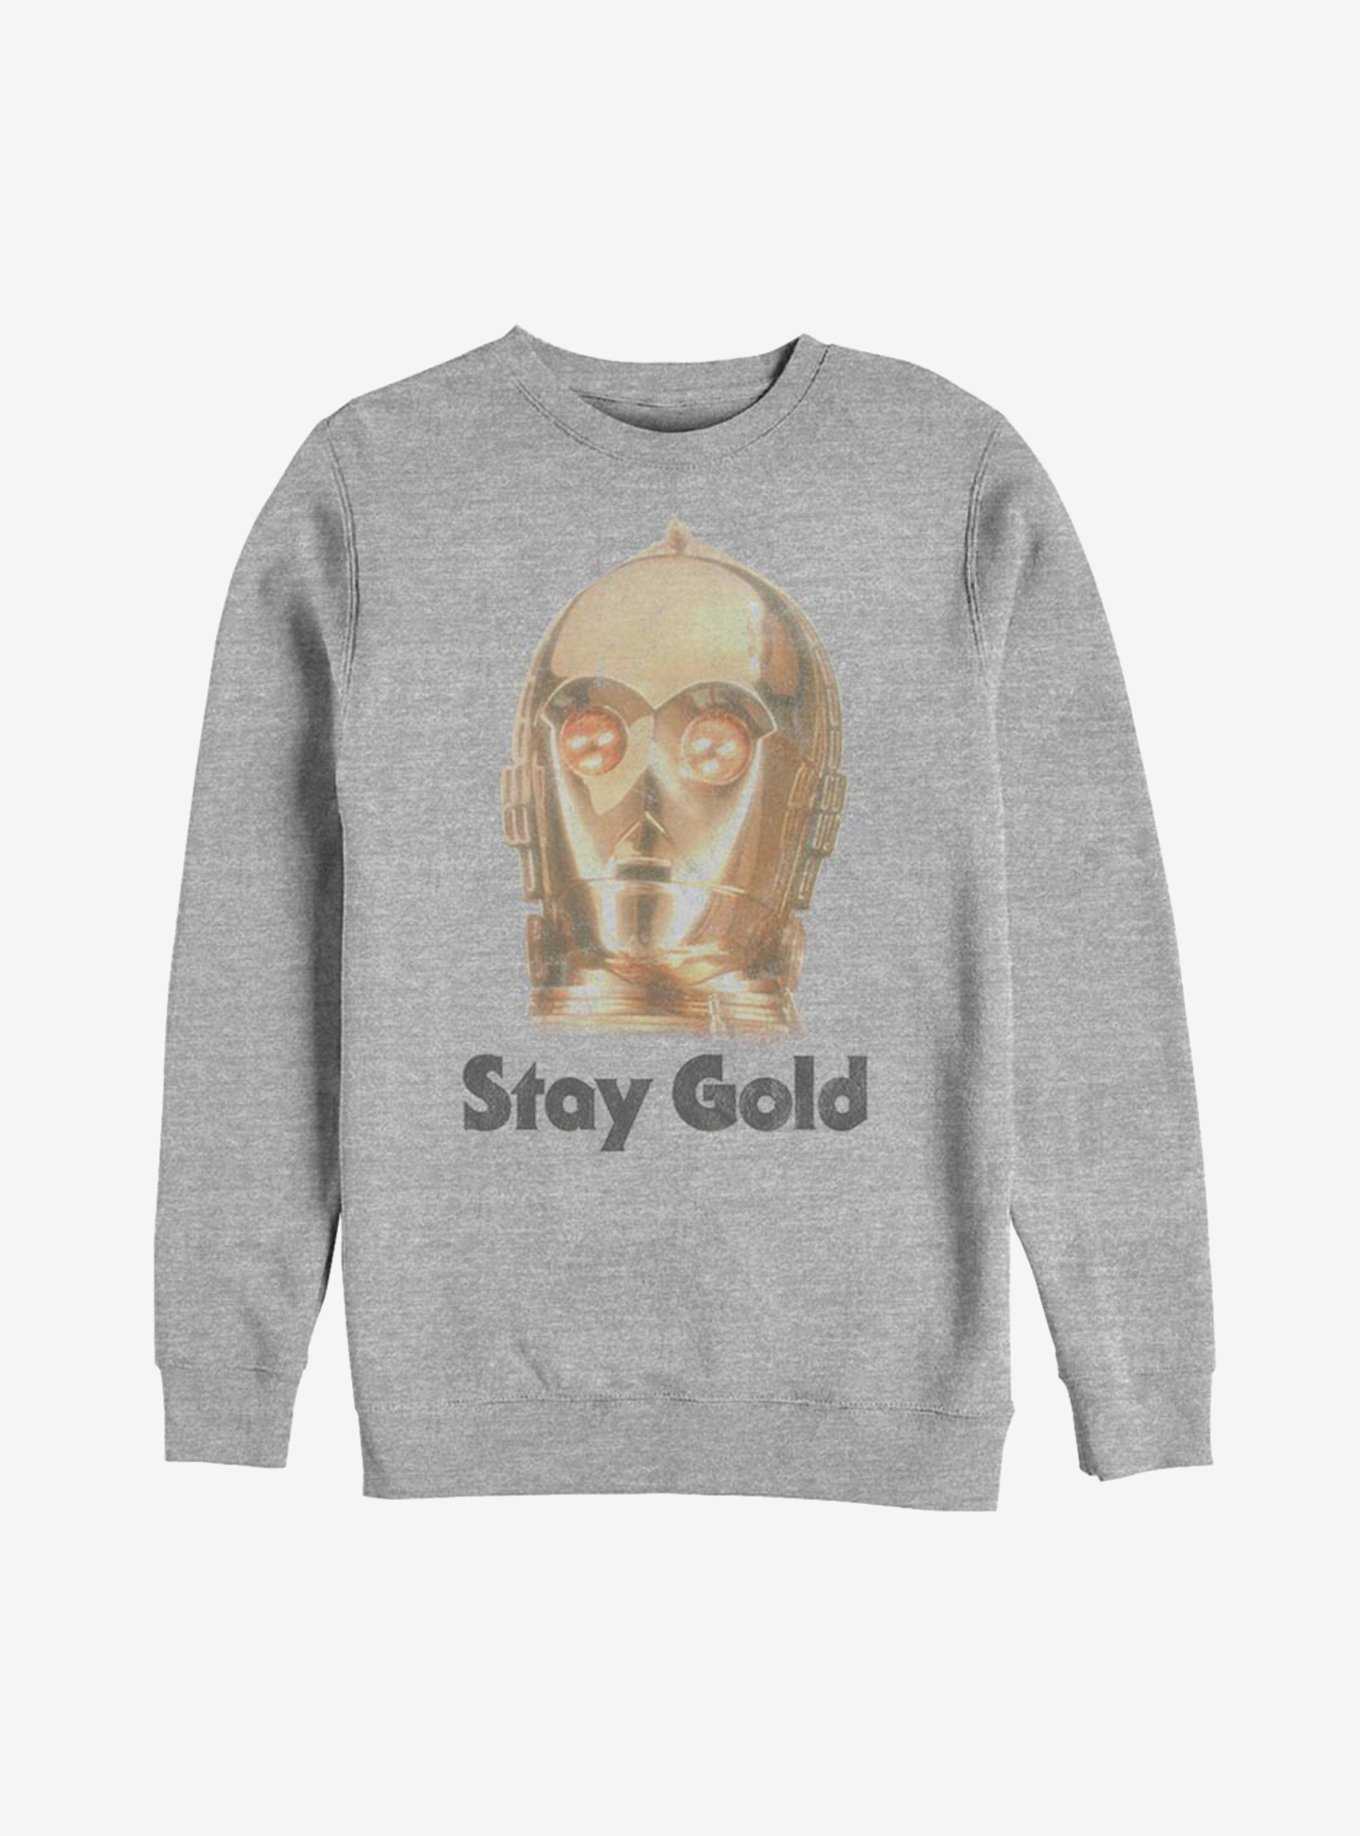 Star Wars Episode IX The Rise Of Skywalker Stay Gold Sweatshirt, , hi-res